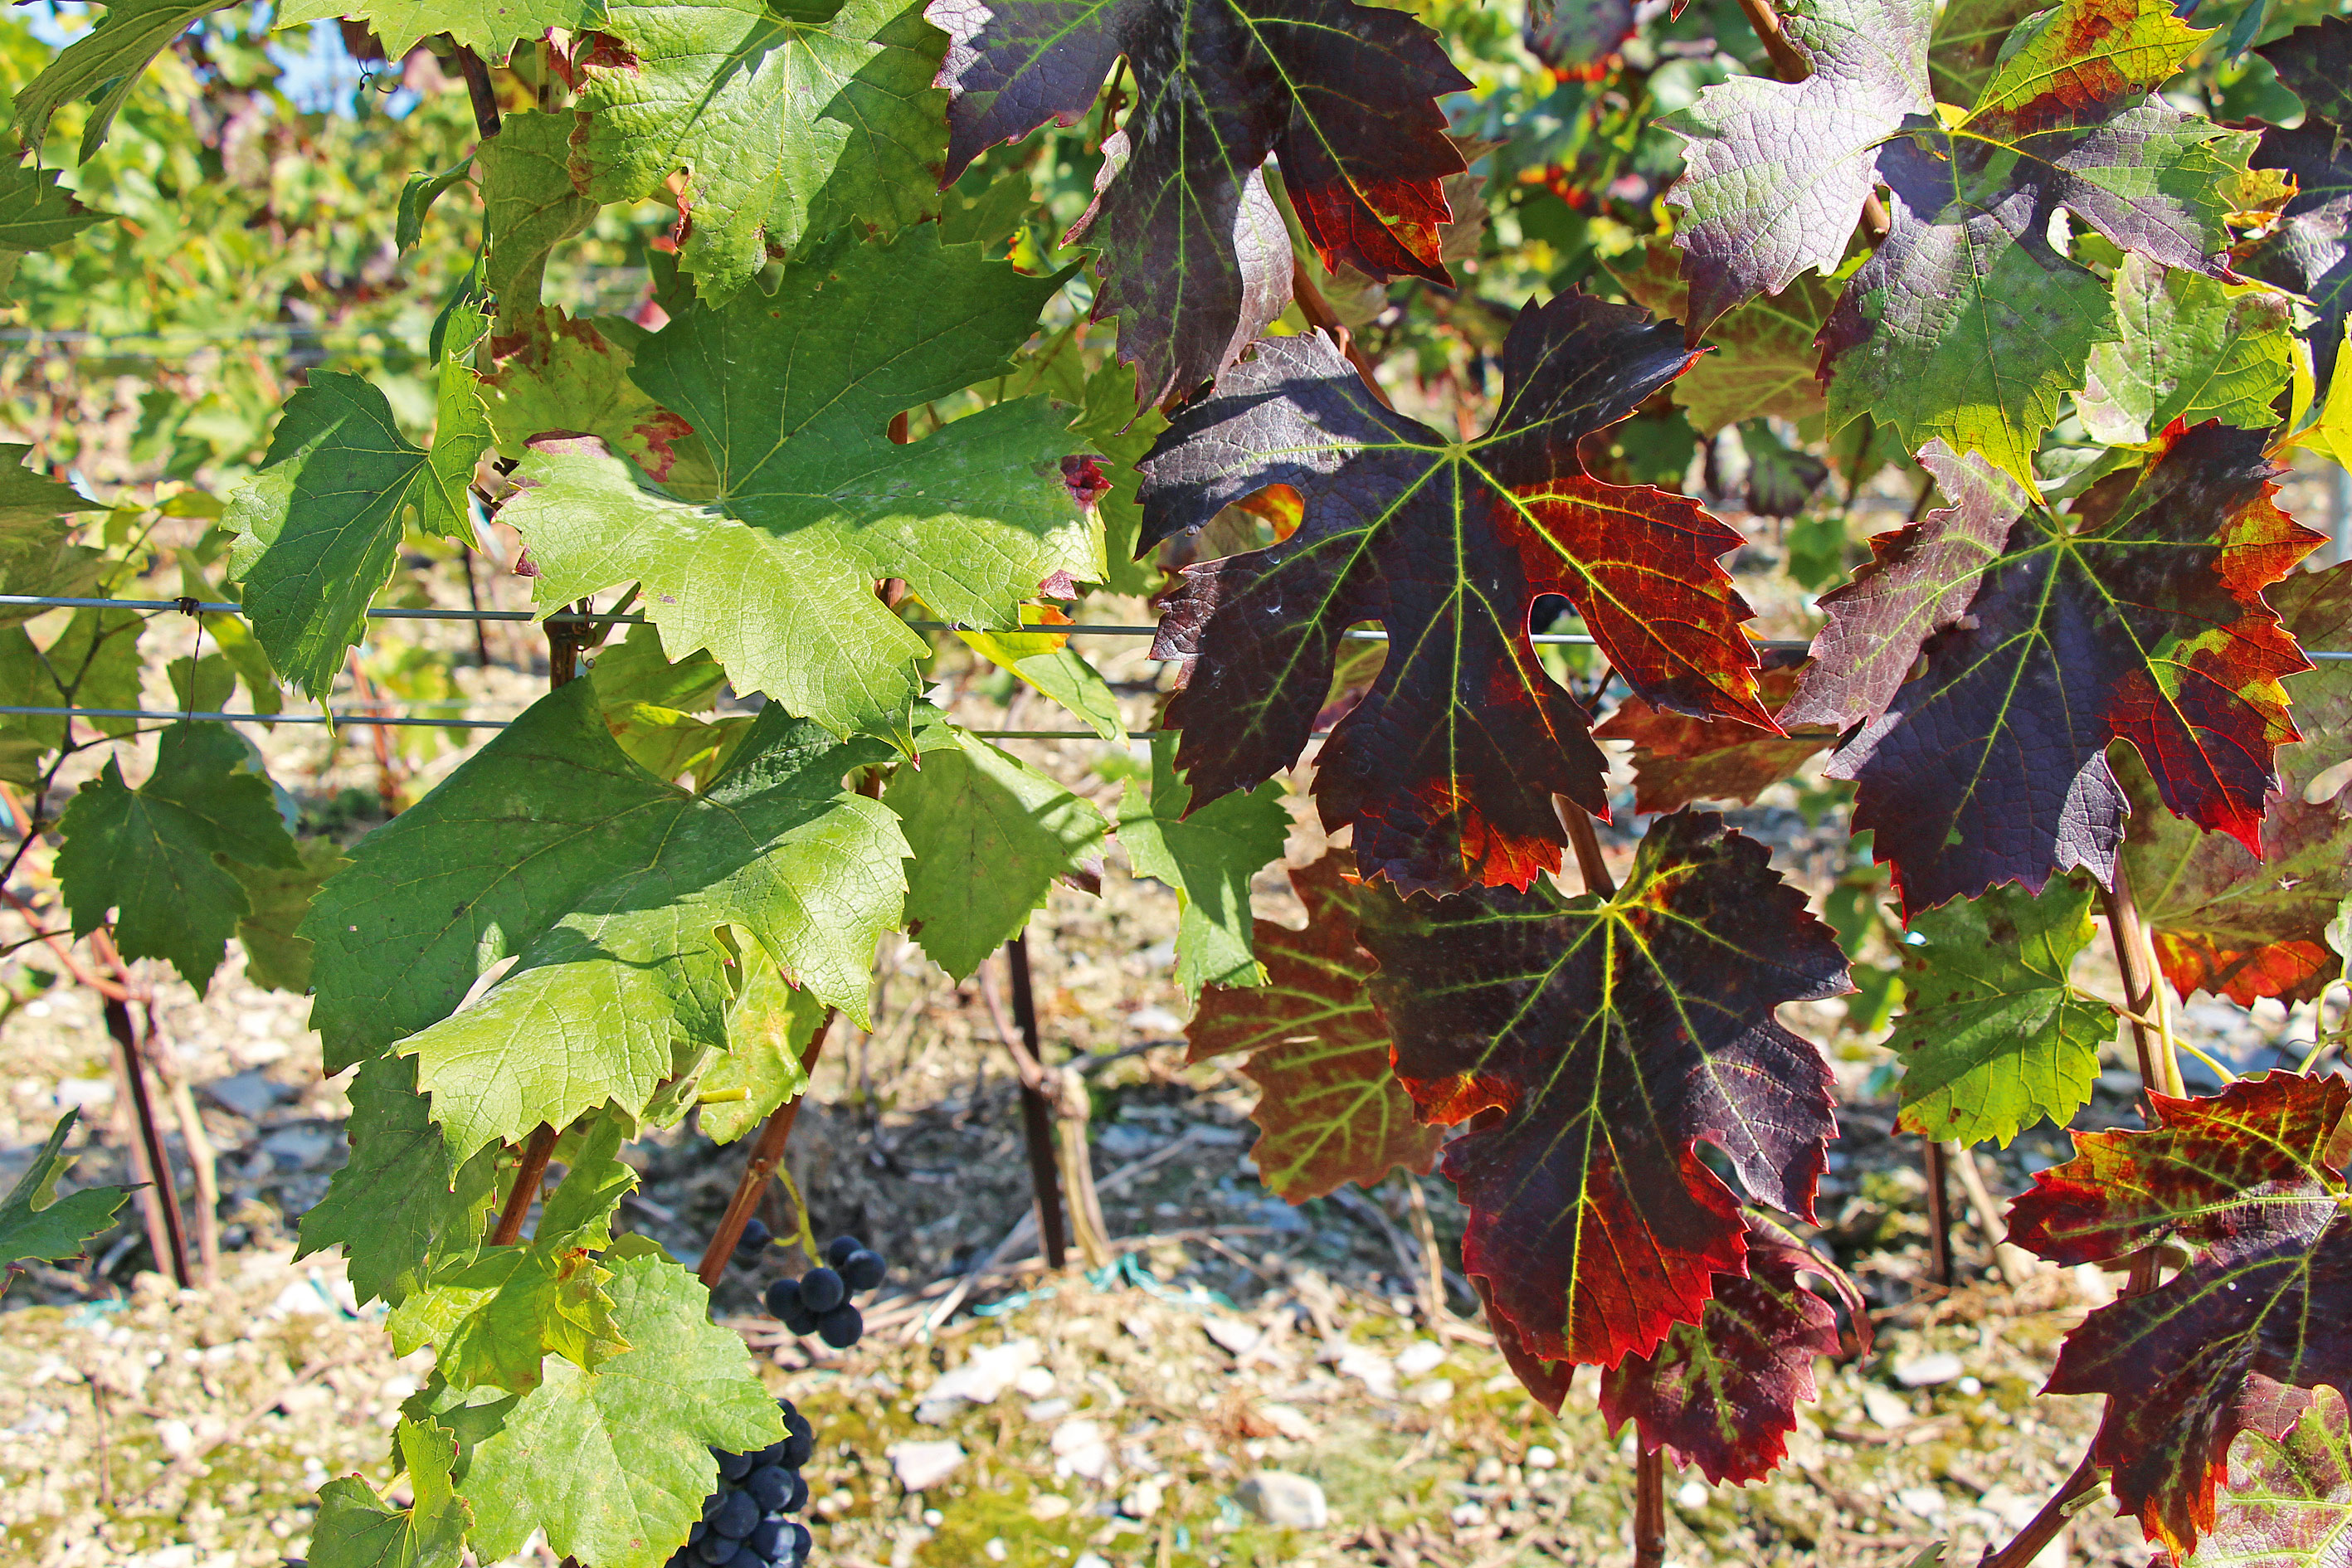 Current status of major grapevine viruses in La Côte vineyards of Switzerland